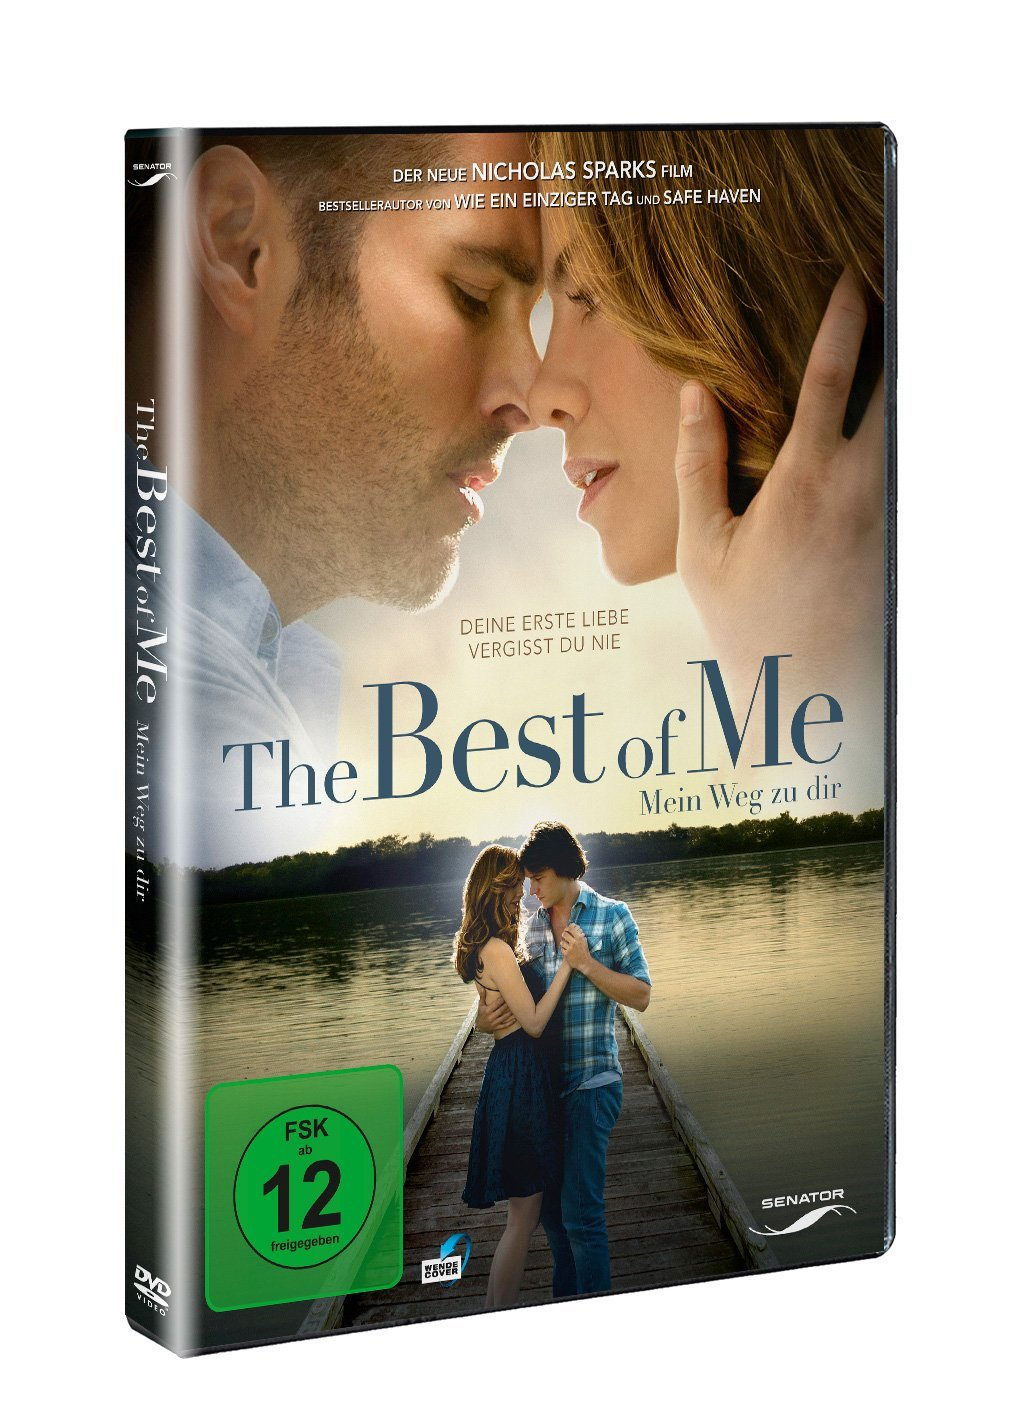 The Best of Weg - Mein DVD dir me zu